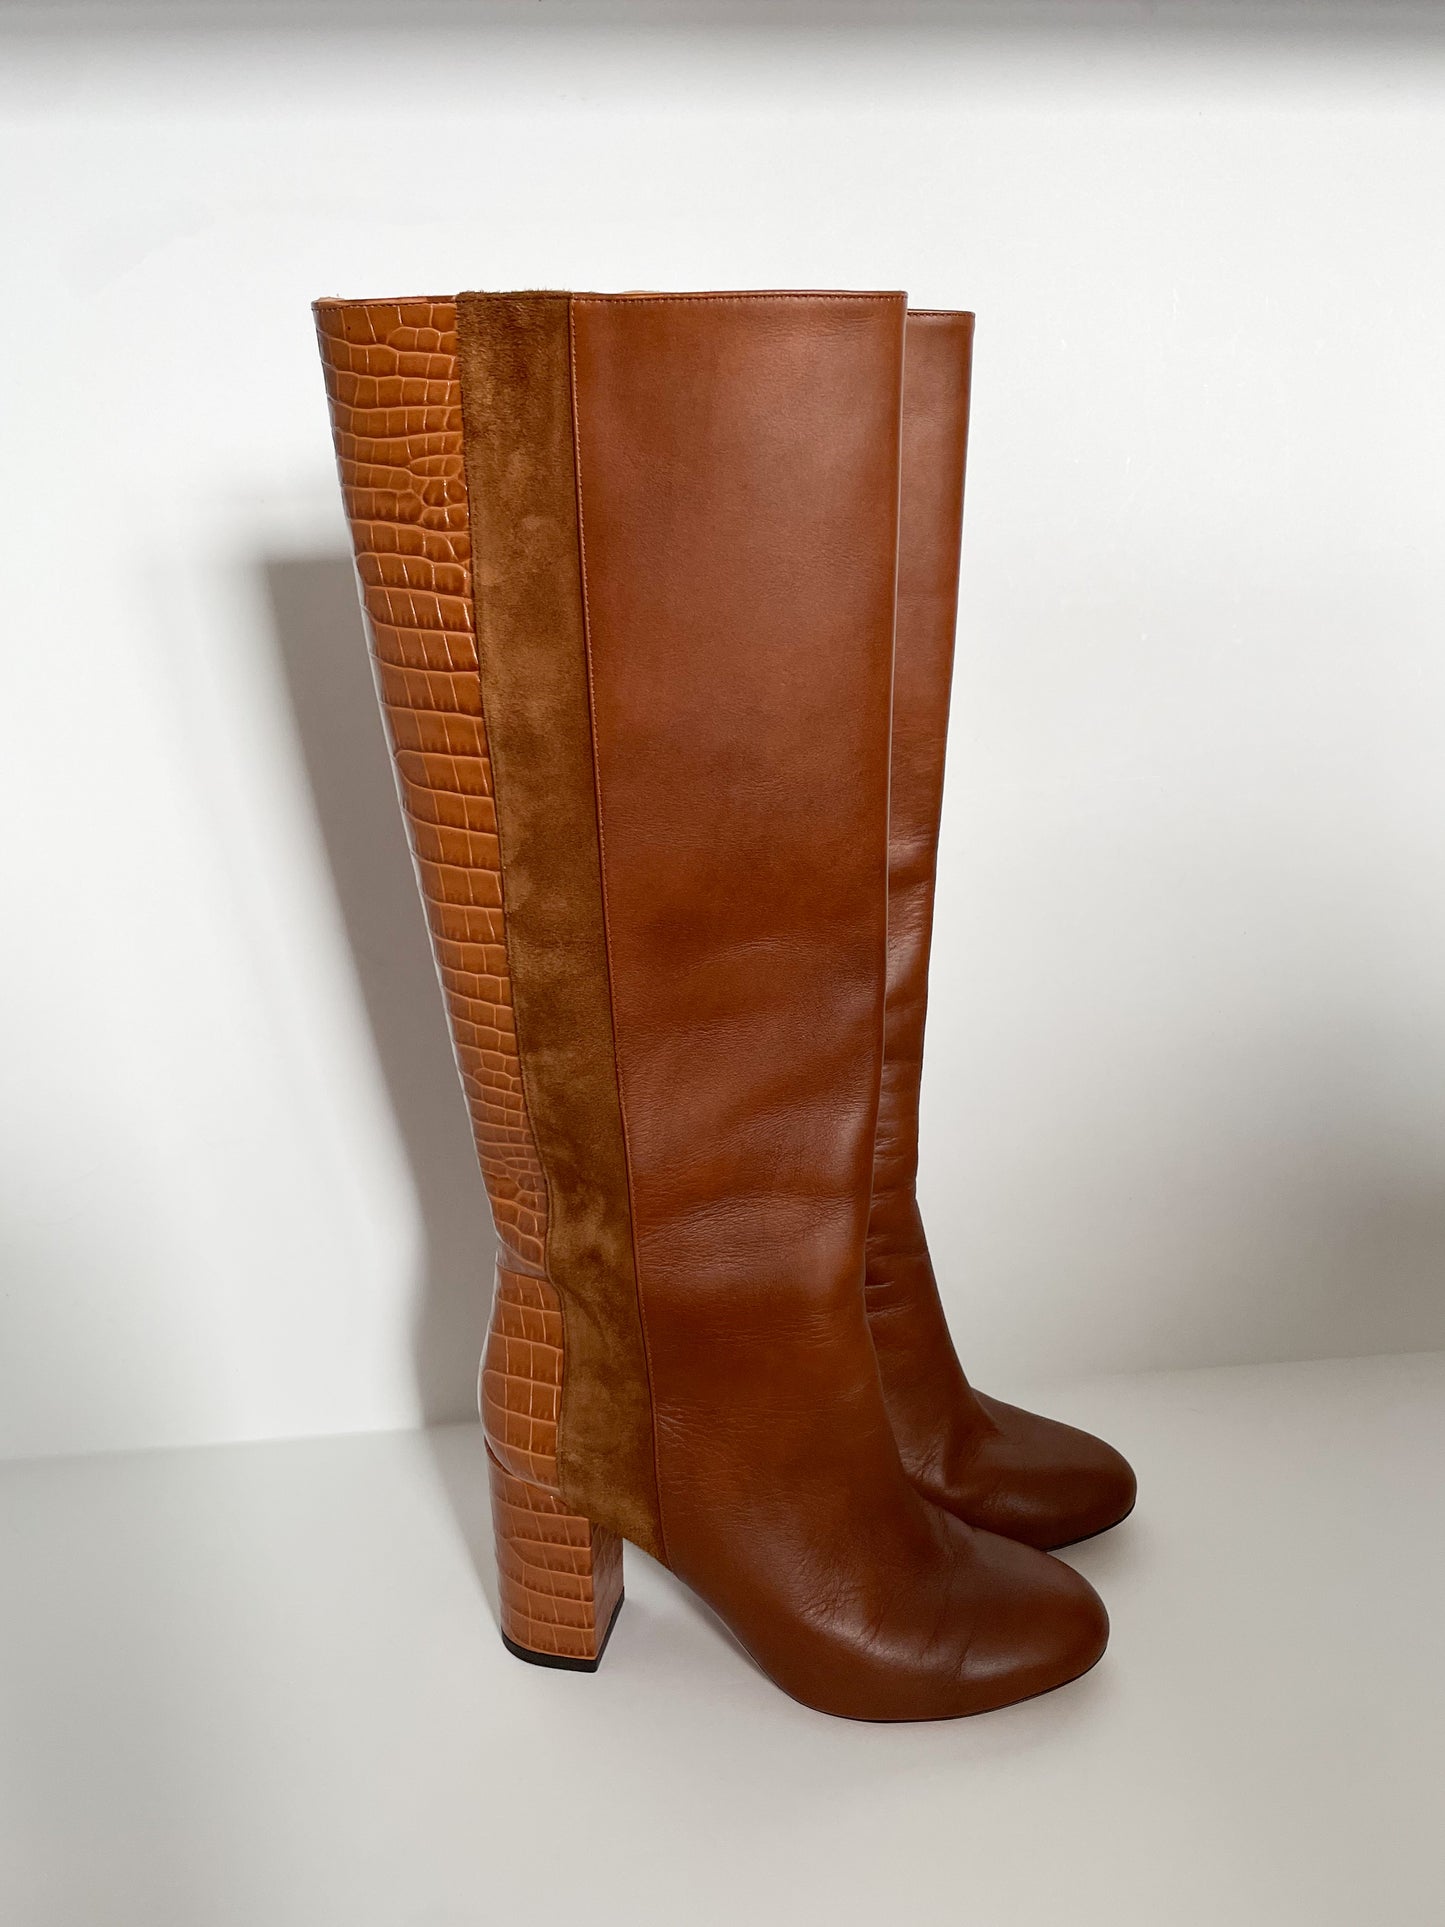 Aquazzura Manzoni Camel Leather Knee-High Boots - Size 35